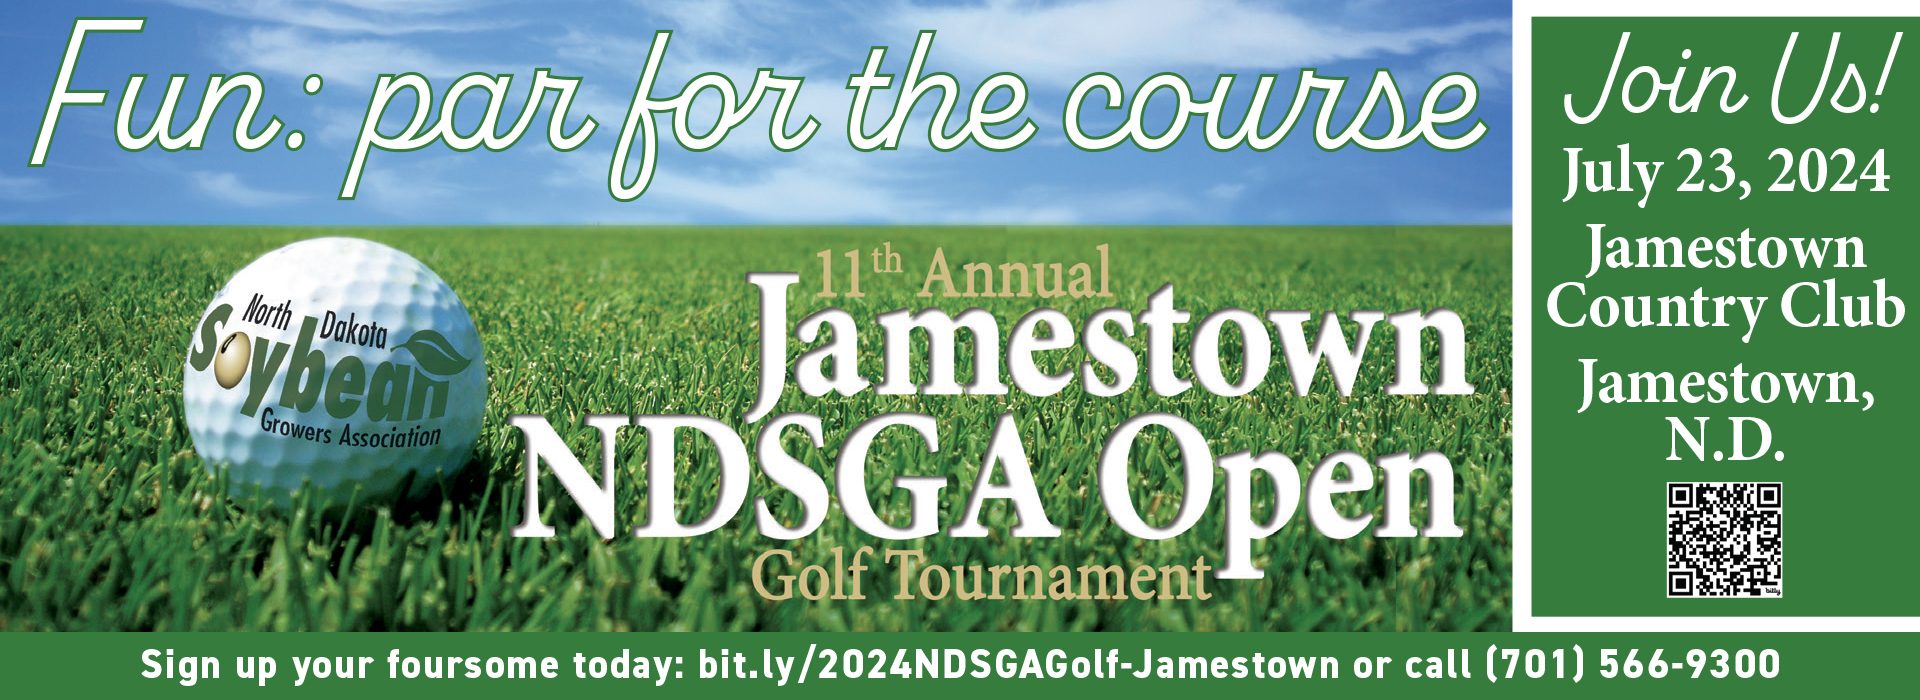 NDSGA Golf Tournament Jamestown